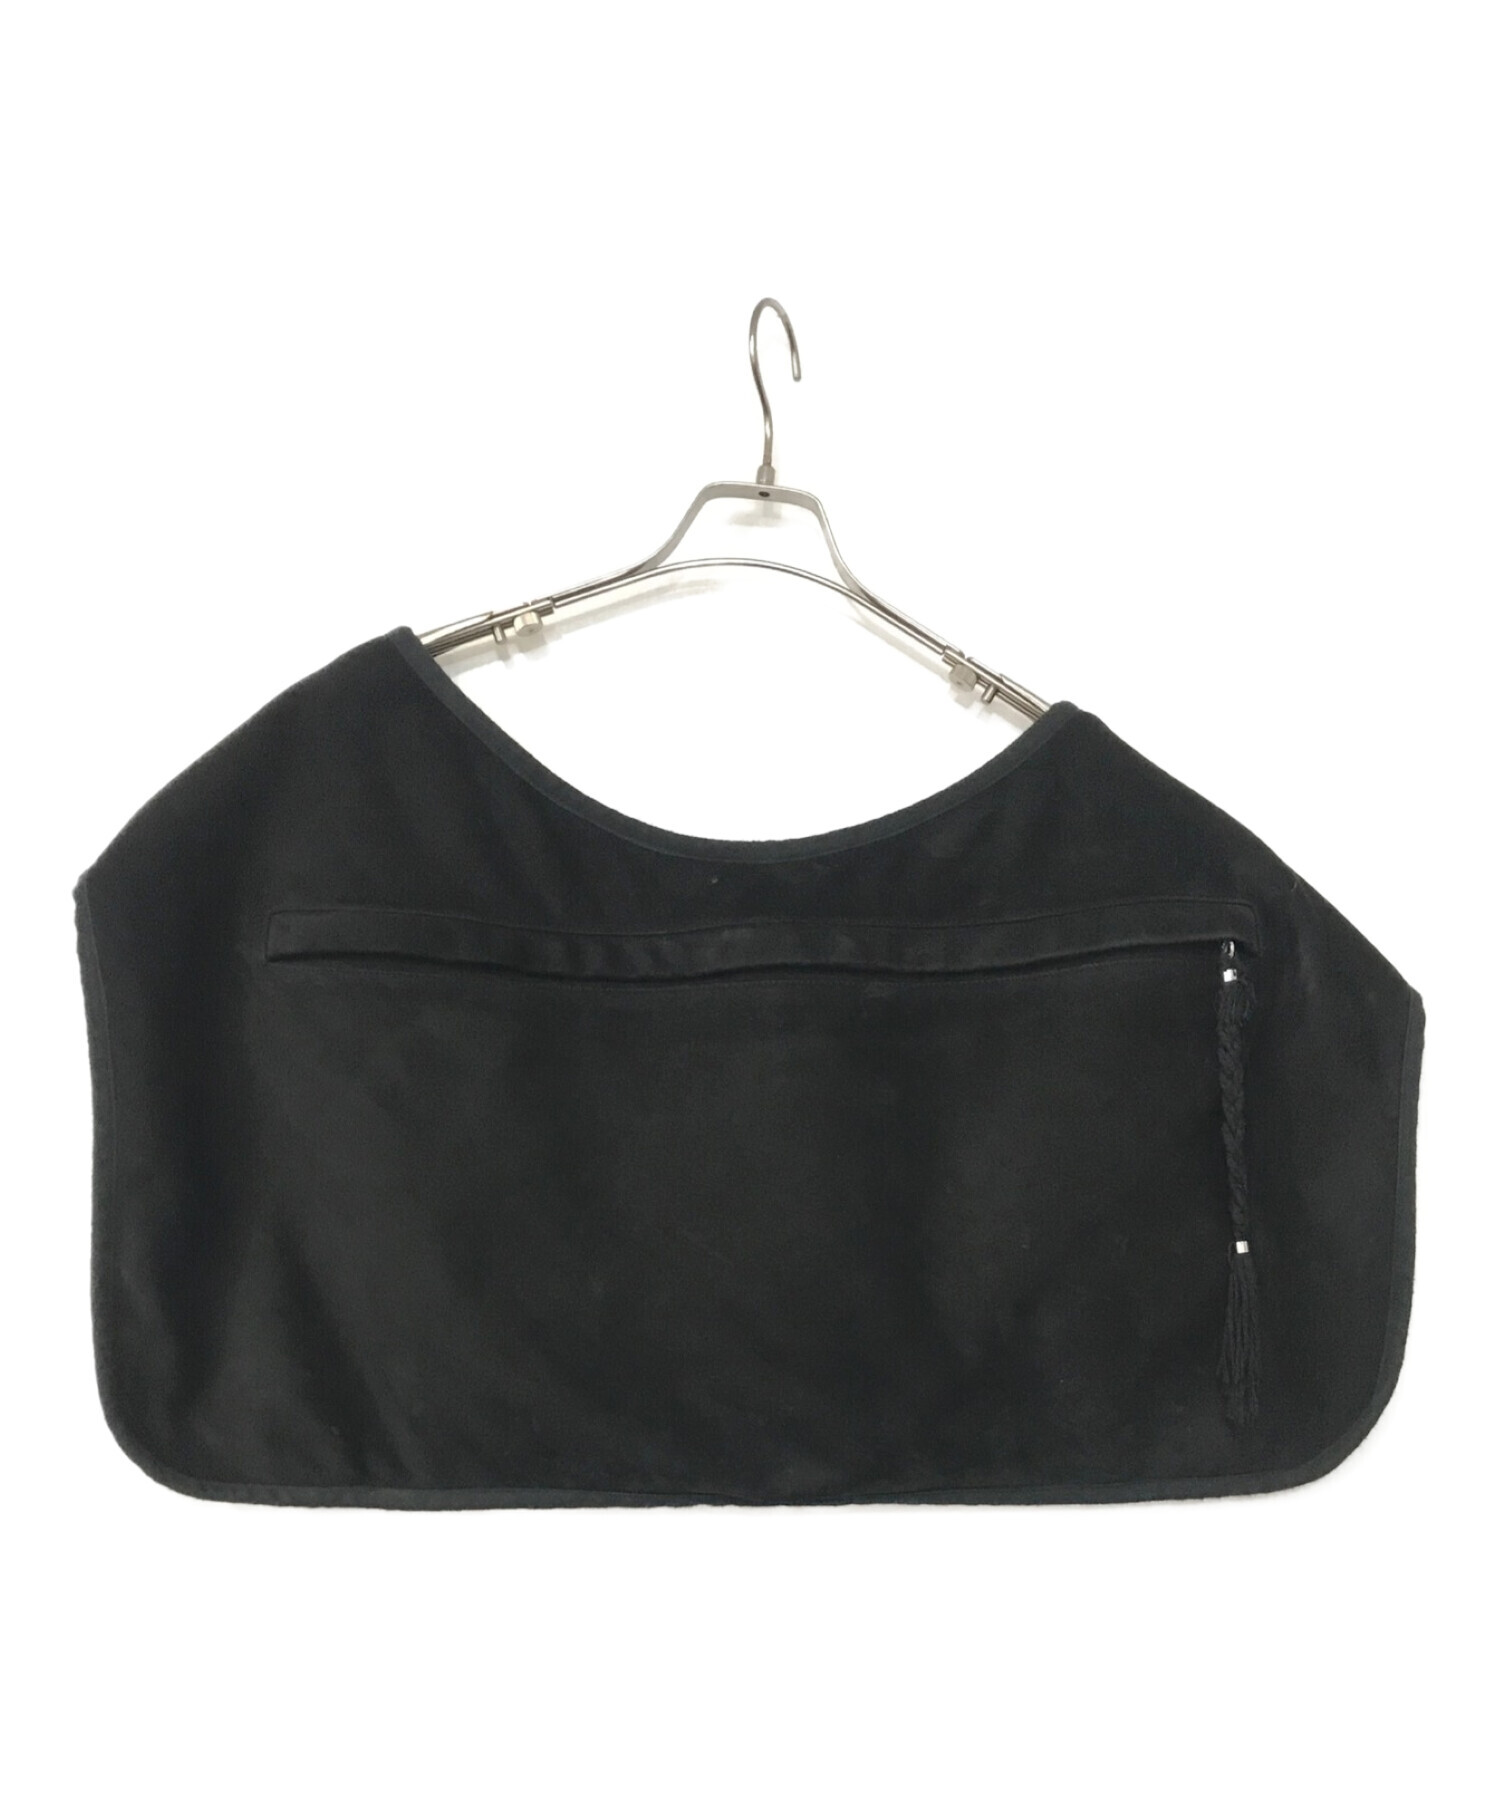 fujimoto (フジモト) Robe Body Bag